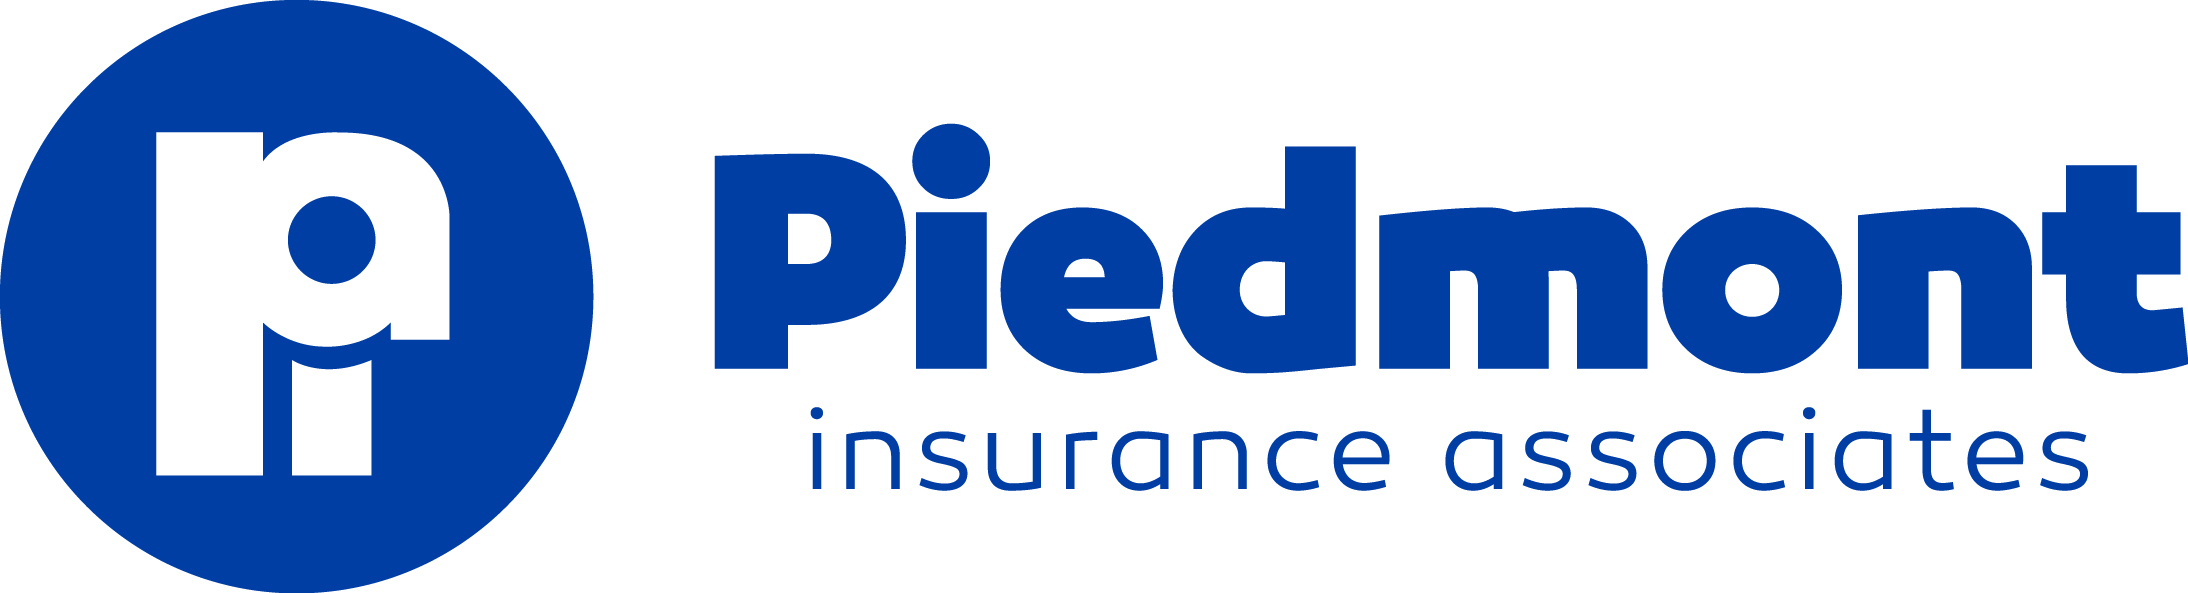 Piedmont Insurance Associates, Inc.'s logo